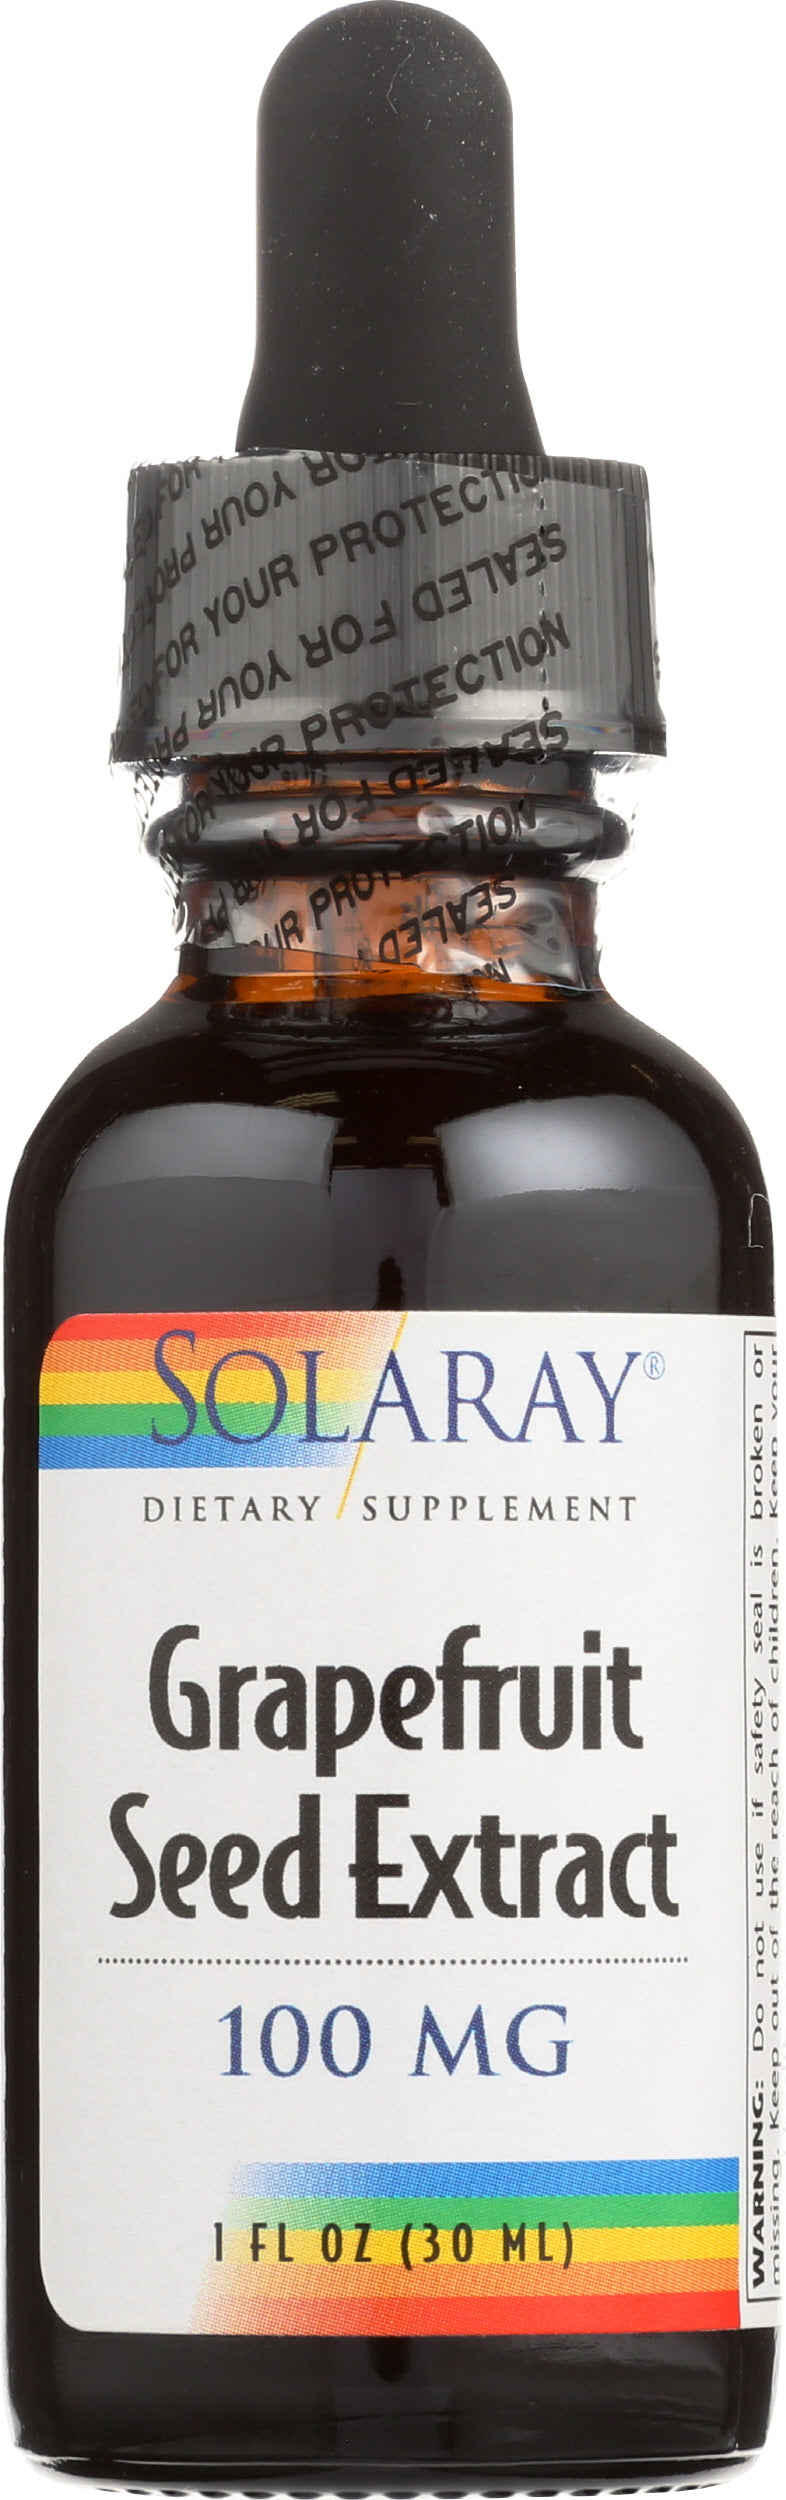 Solaray Grapefruit Seed Extract 100 mg 1 fl. oz. Front